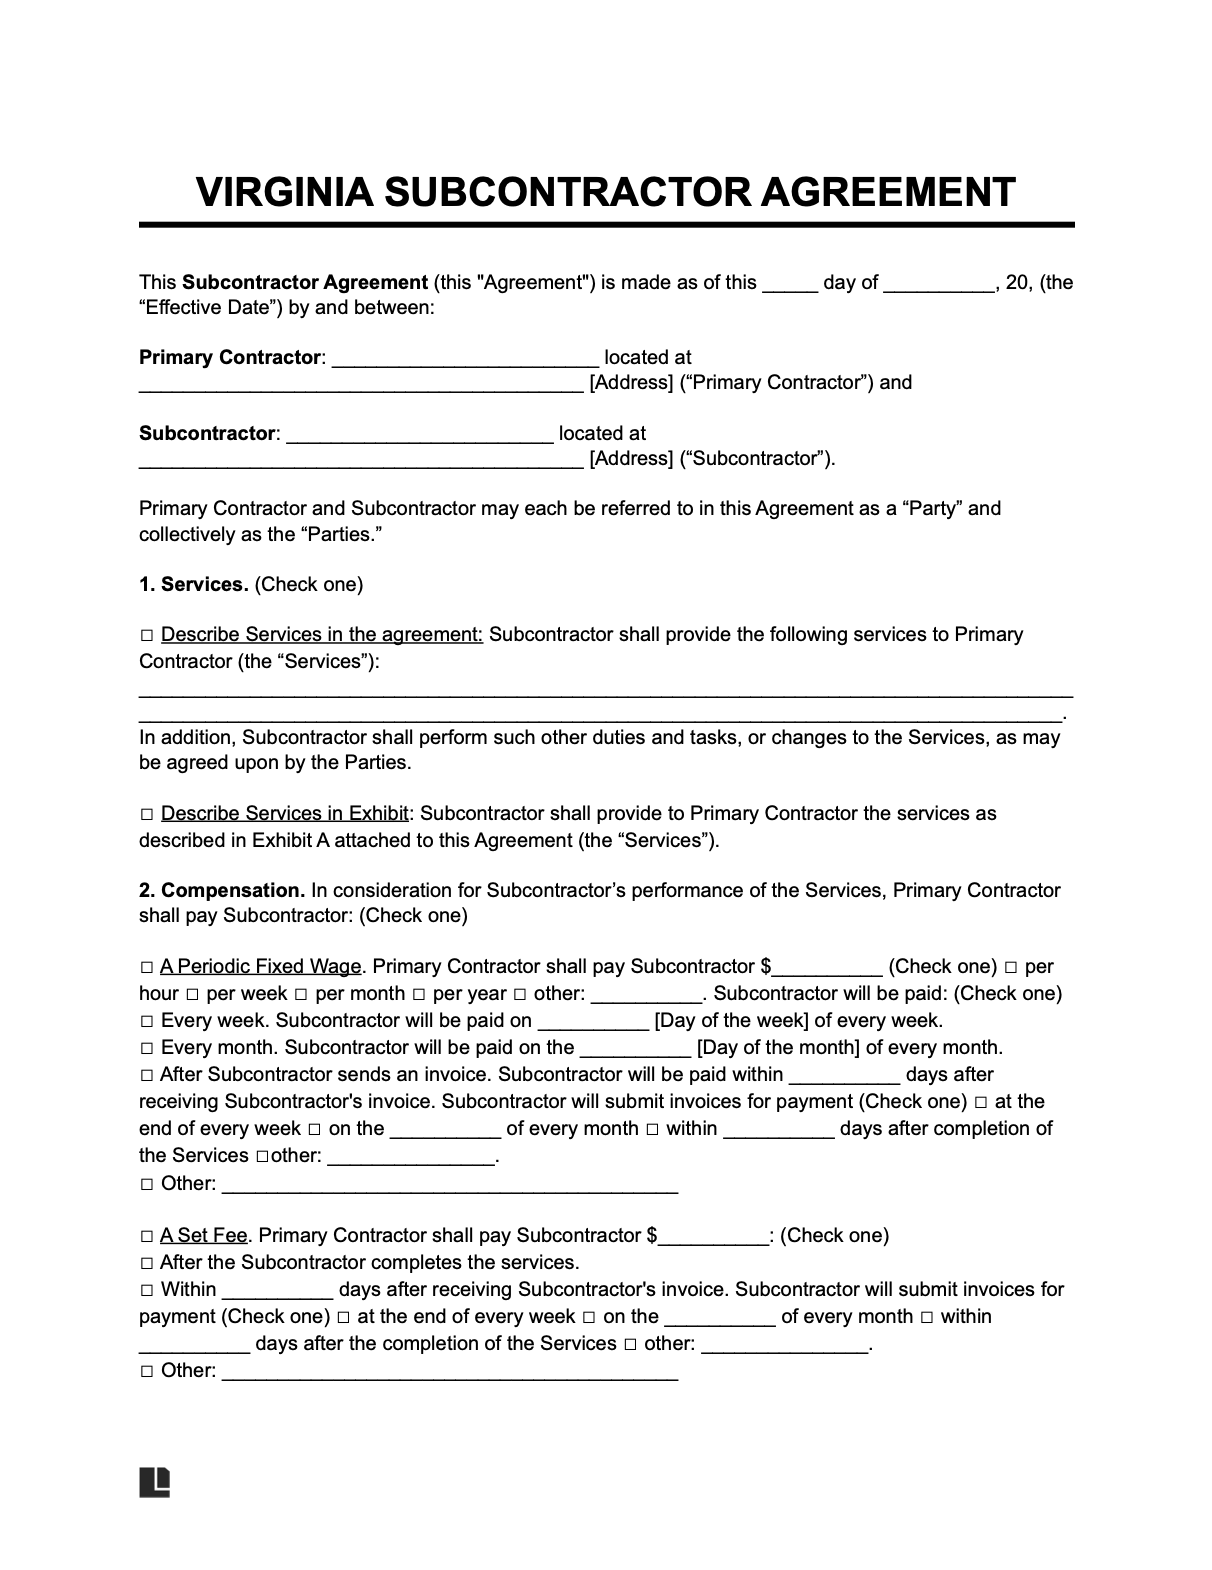 virginia subcontractor agreement template